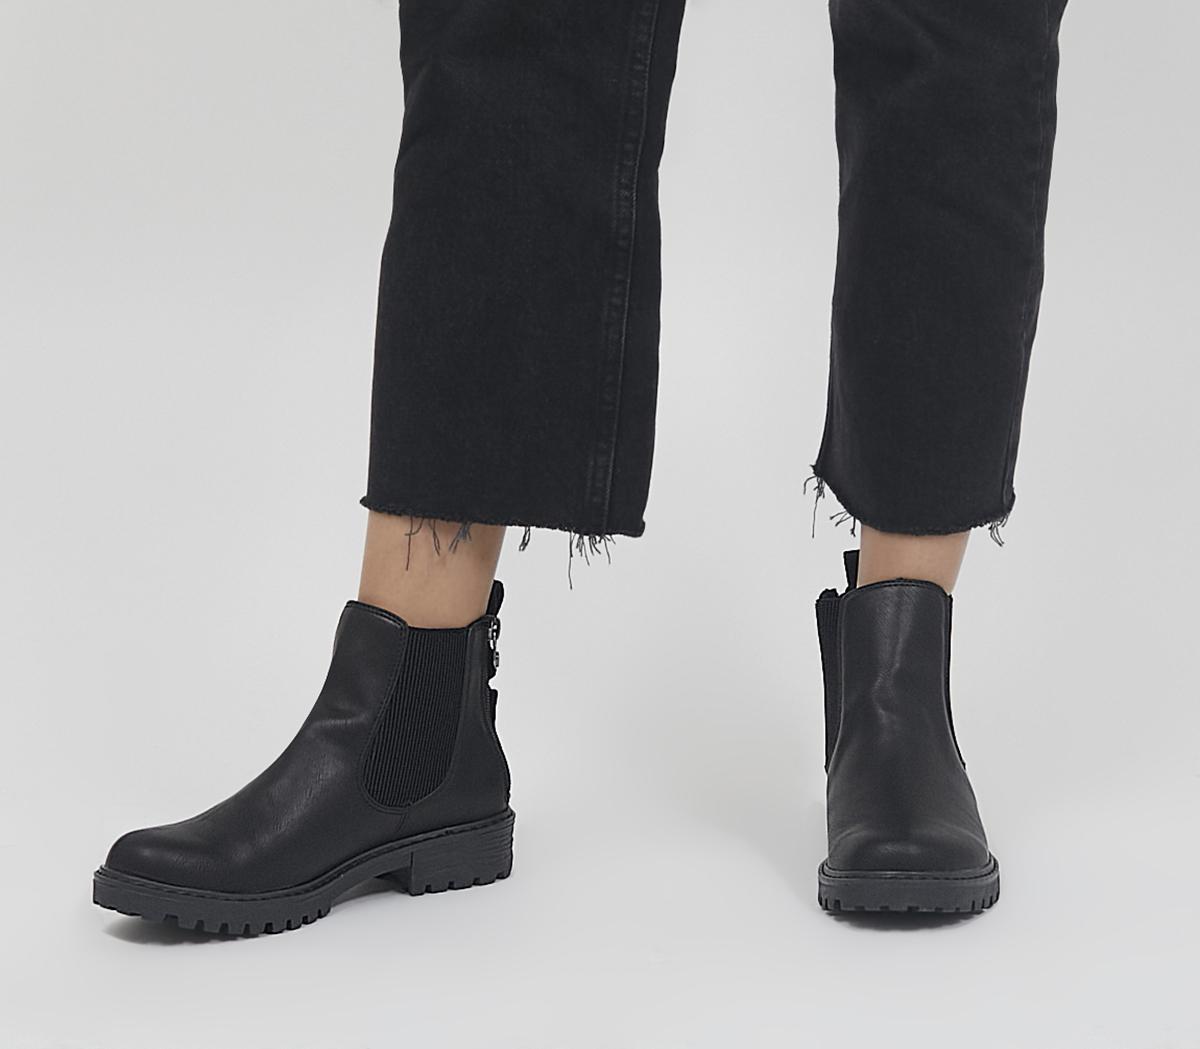 Blowfish Malibu Raffal Chelsea Boots Black - Women's Ankle Boots